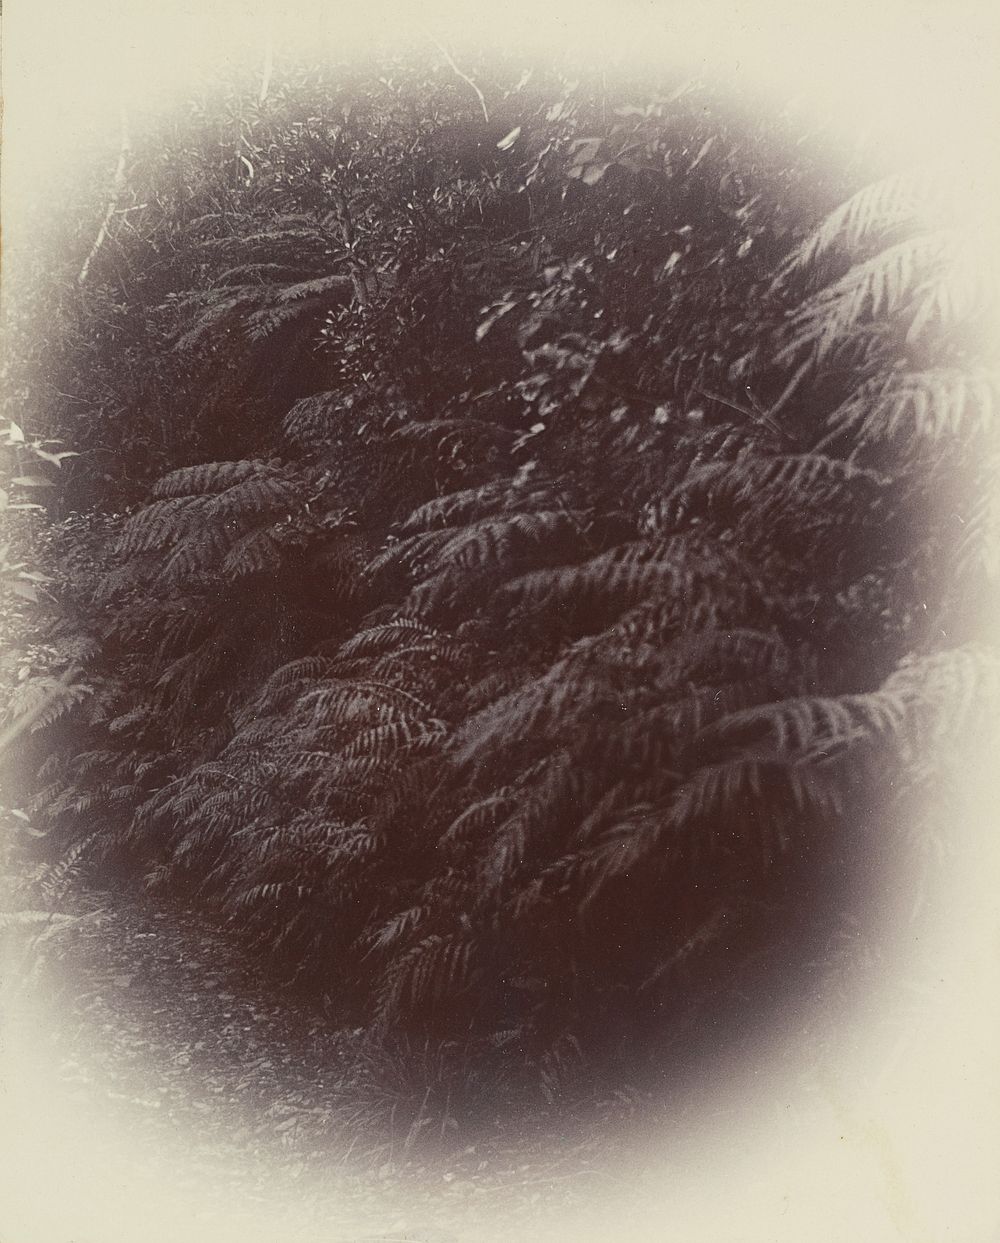 Ferns. From album: Hand camera work photograph album (circa 1898) by Charles Watson.